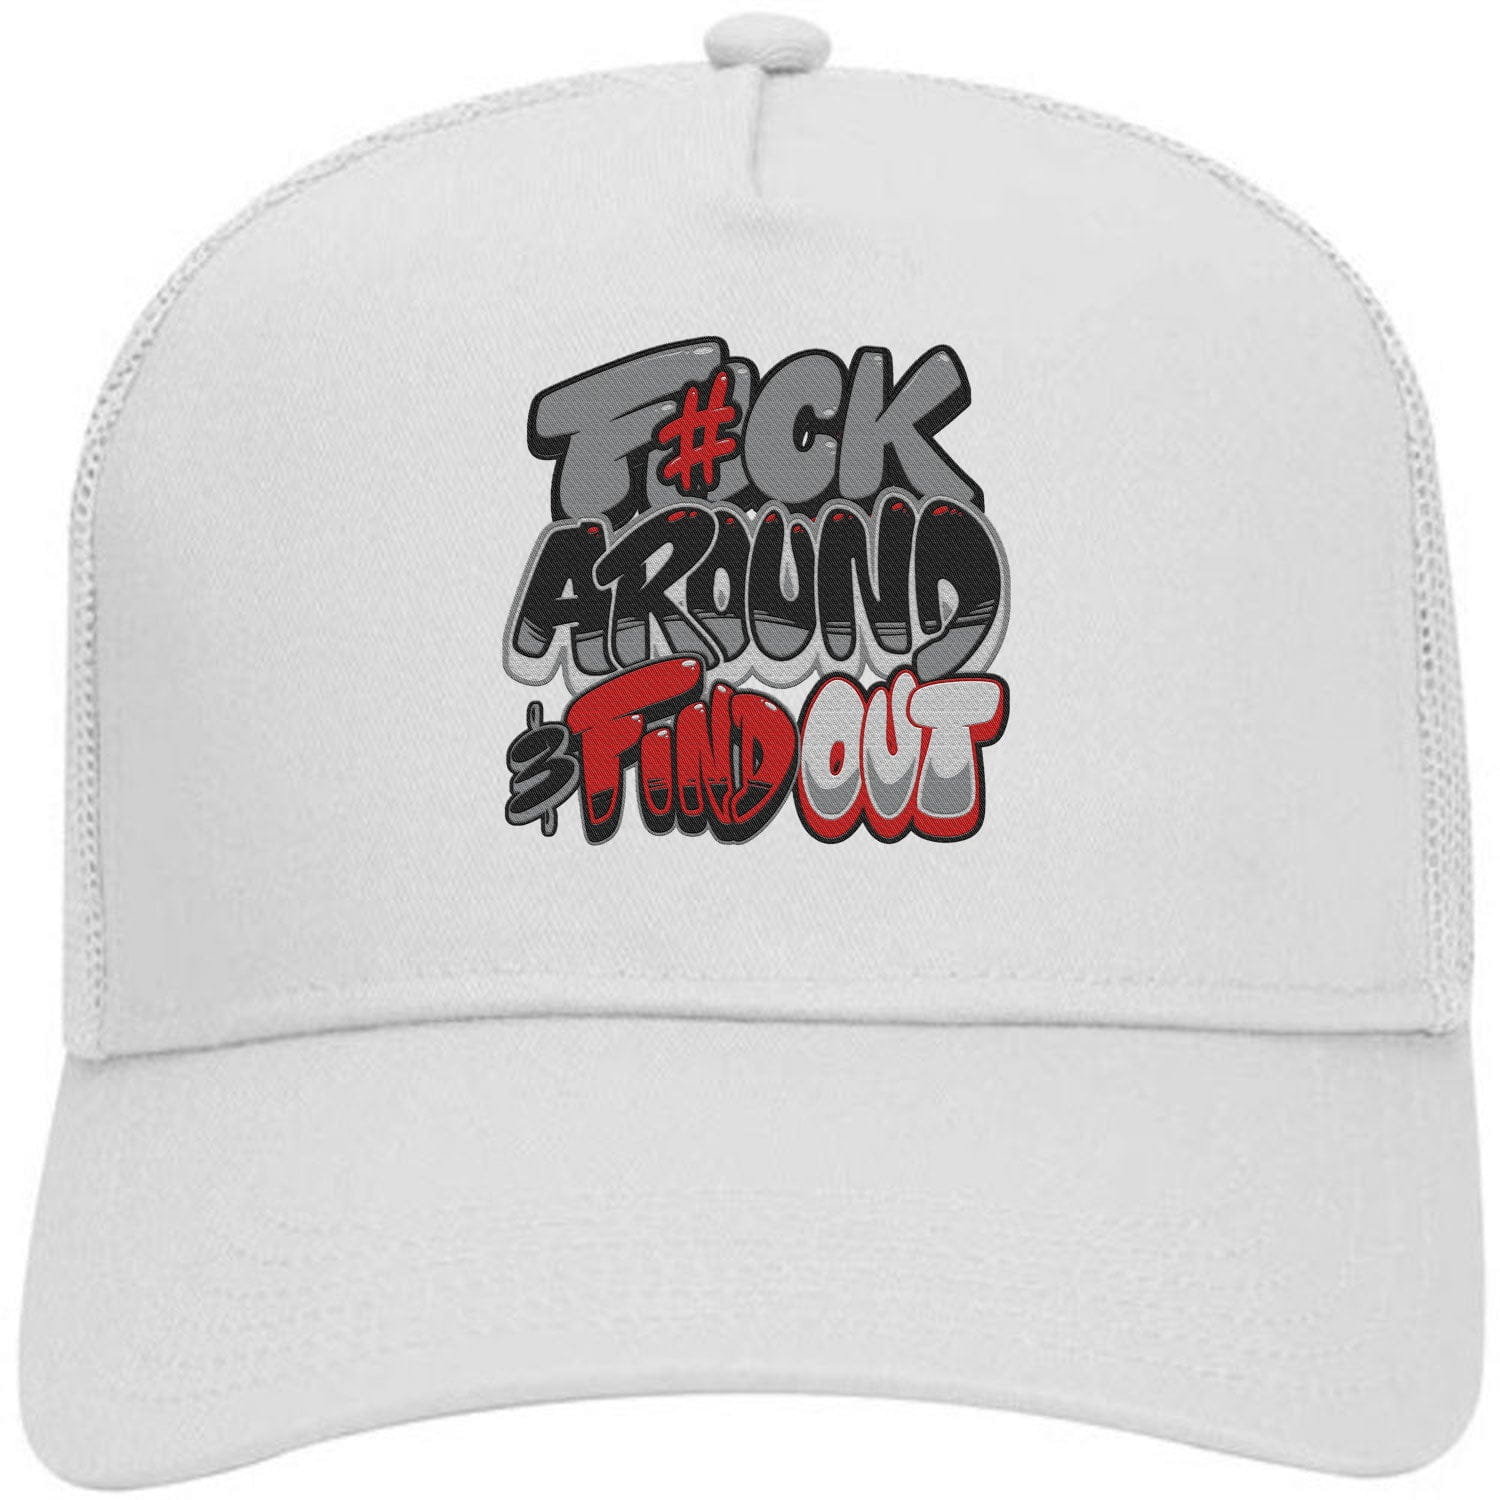 Cherry 12s Trucker Hats - Jordan 12 Cherry Hats - F#ck